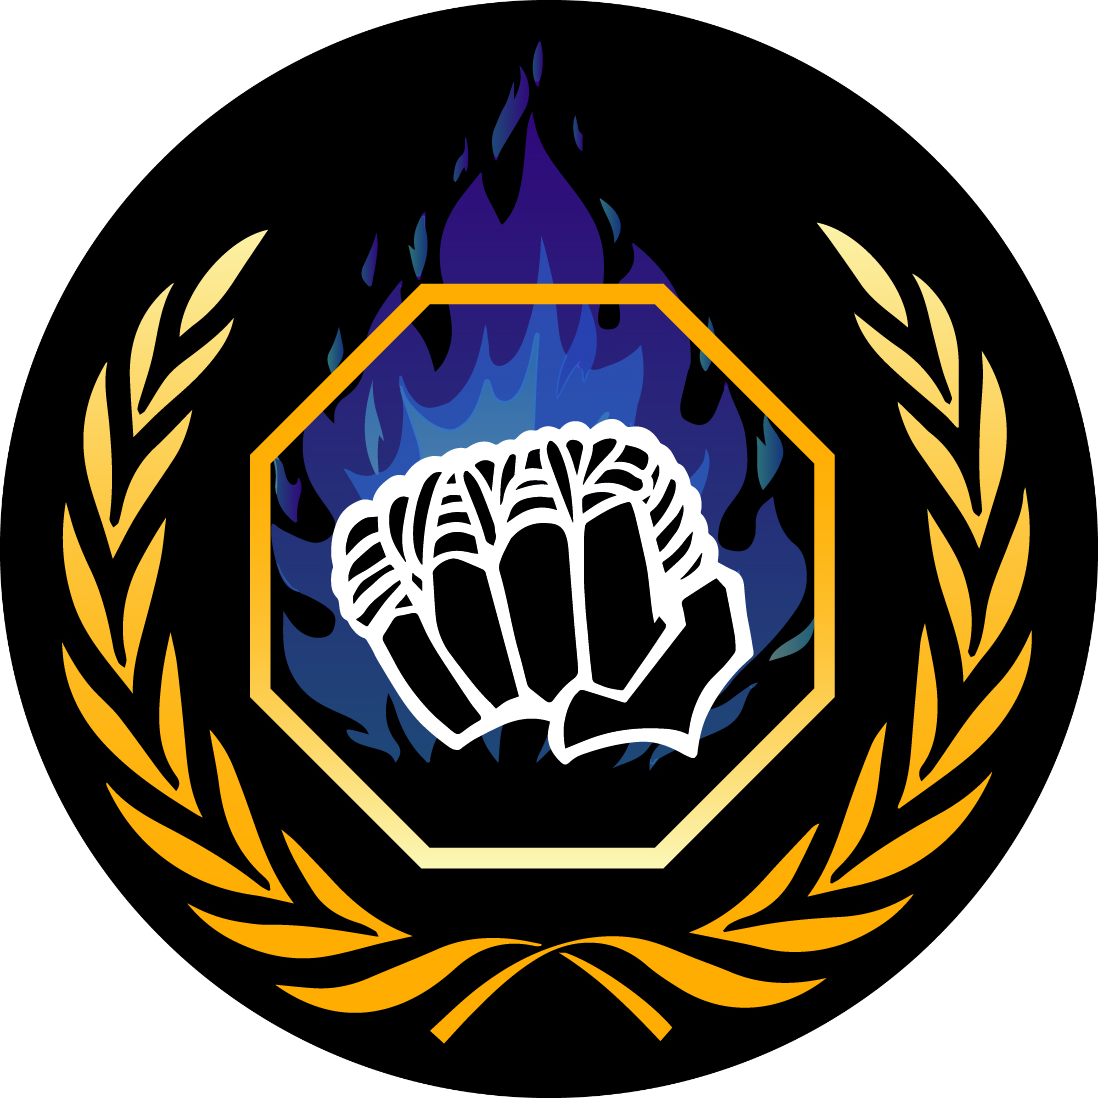 Flaming Soul Warriors: MMA e Muay Thai - Viana do Castelo